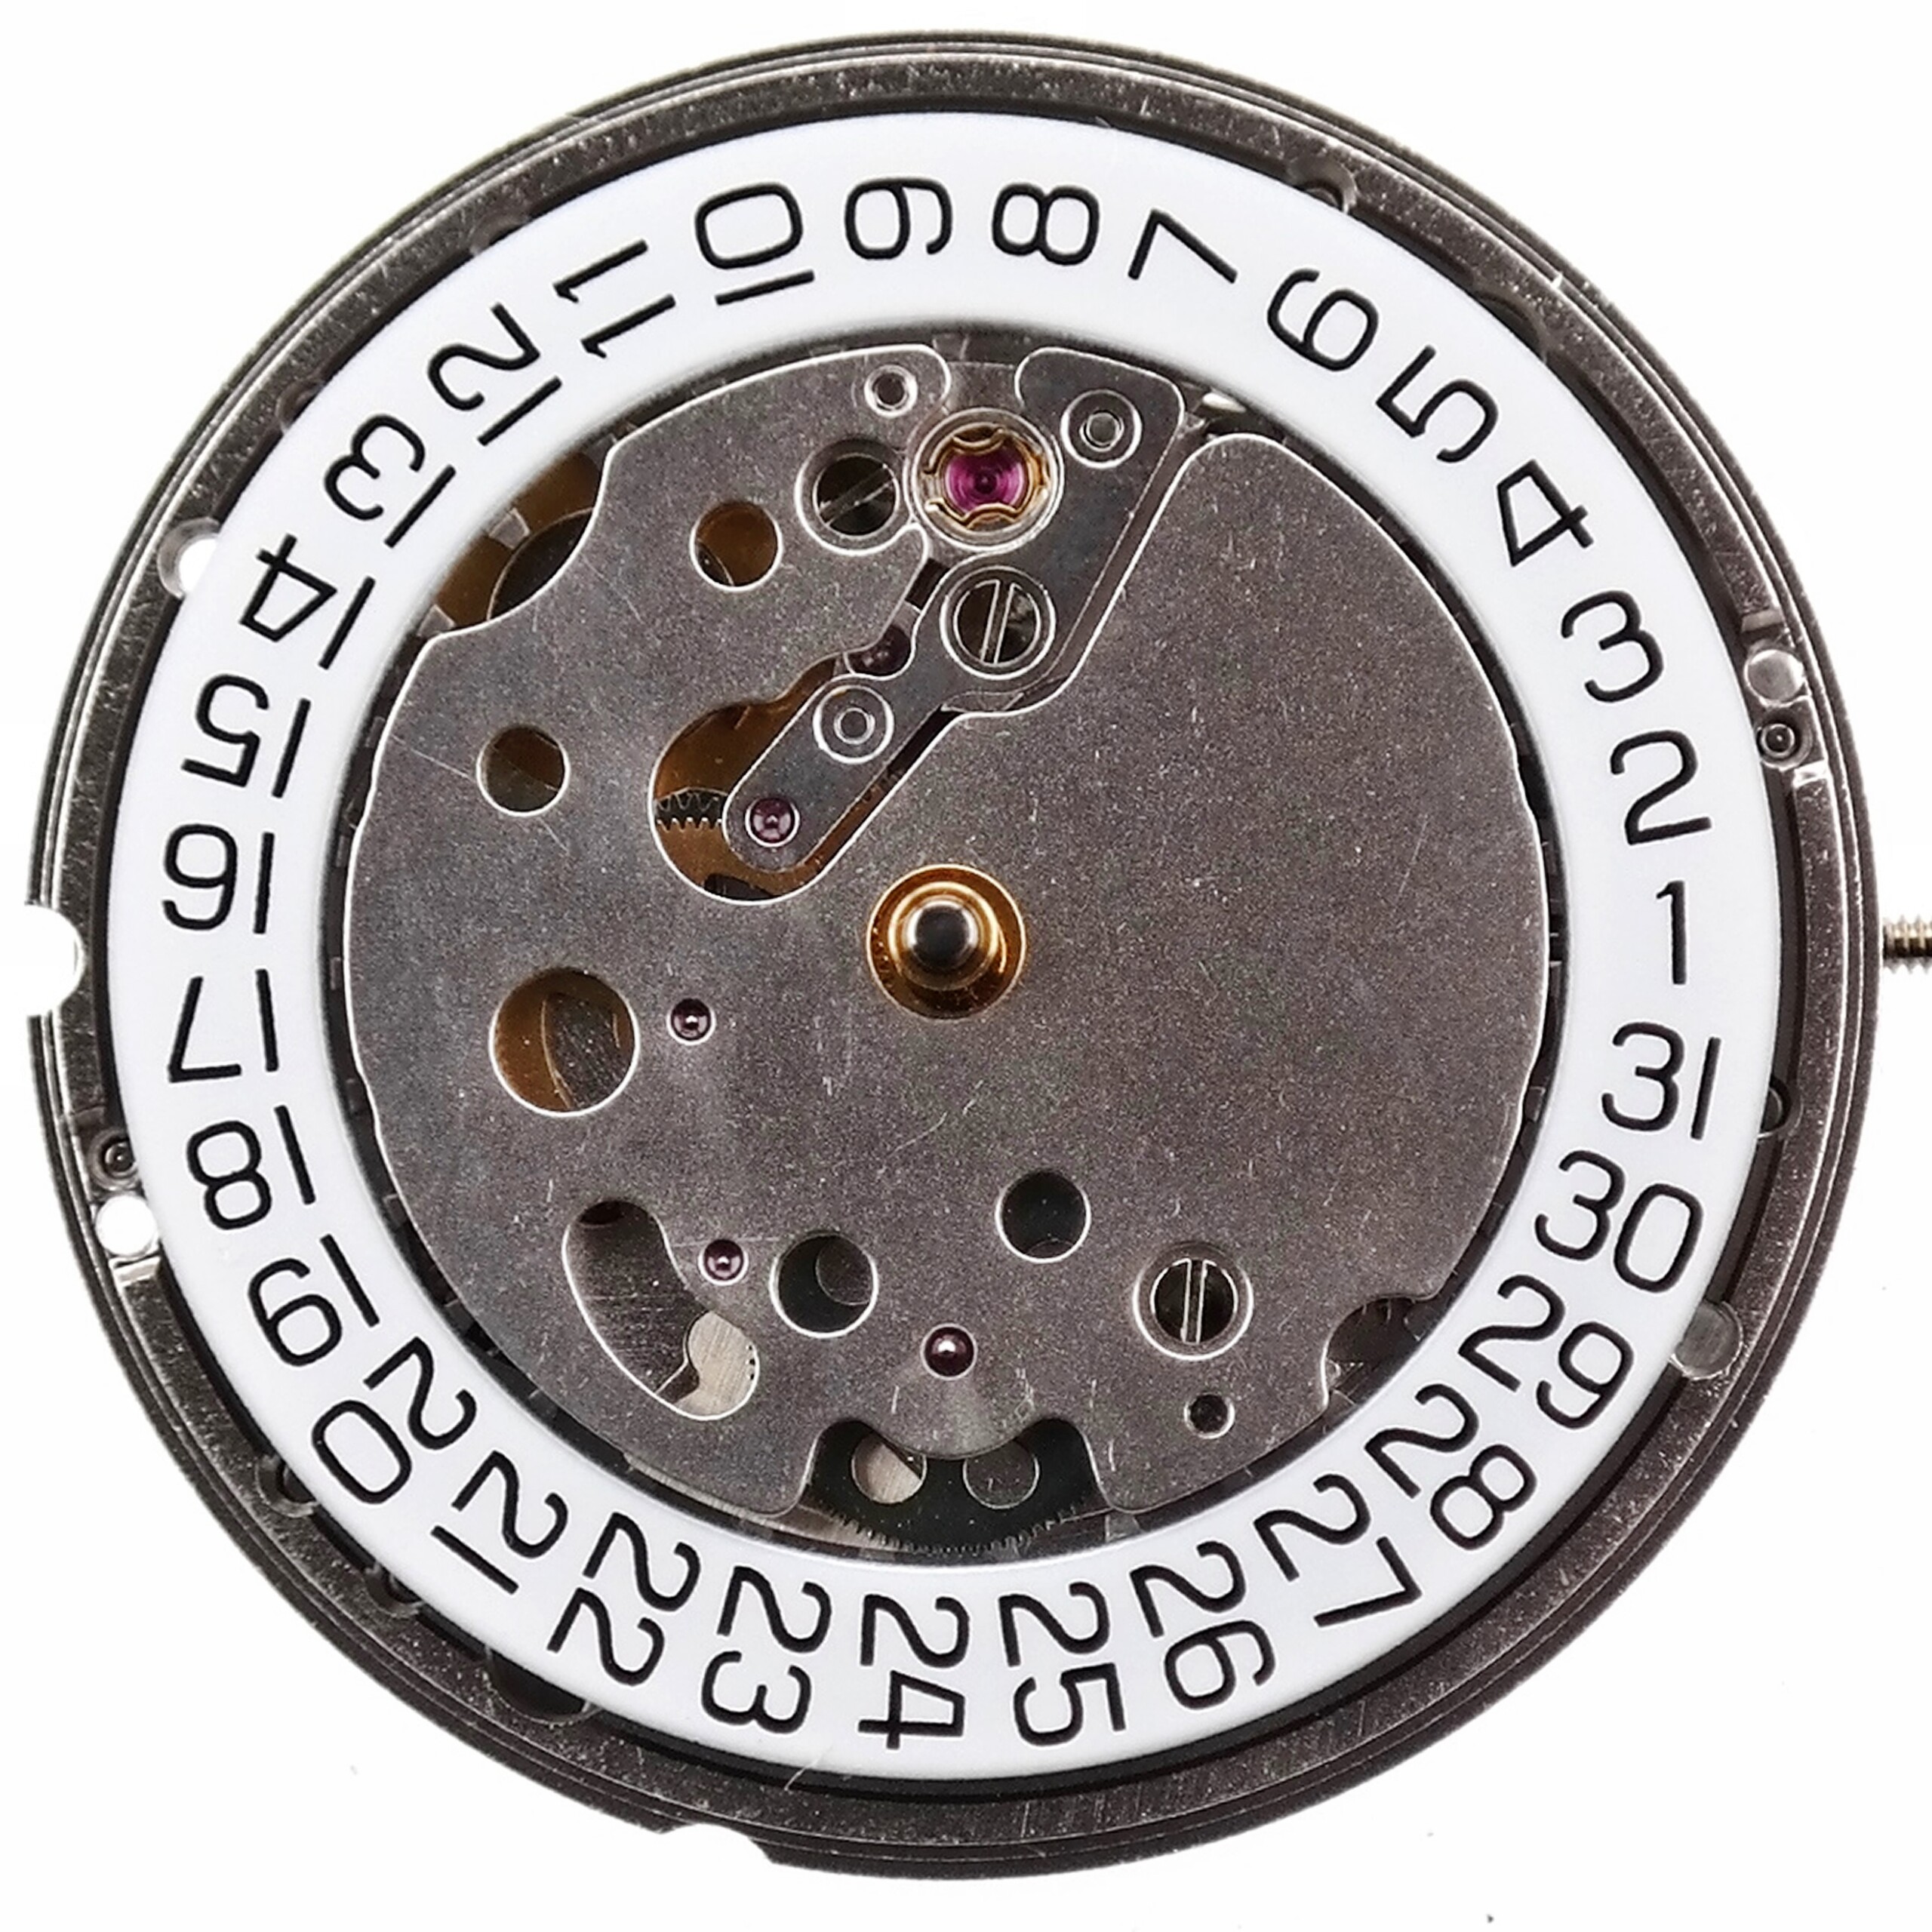 tag heuer calibre 6 eta 2895 2 automatic watch movement chronometer